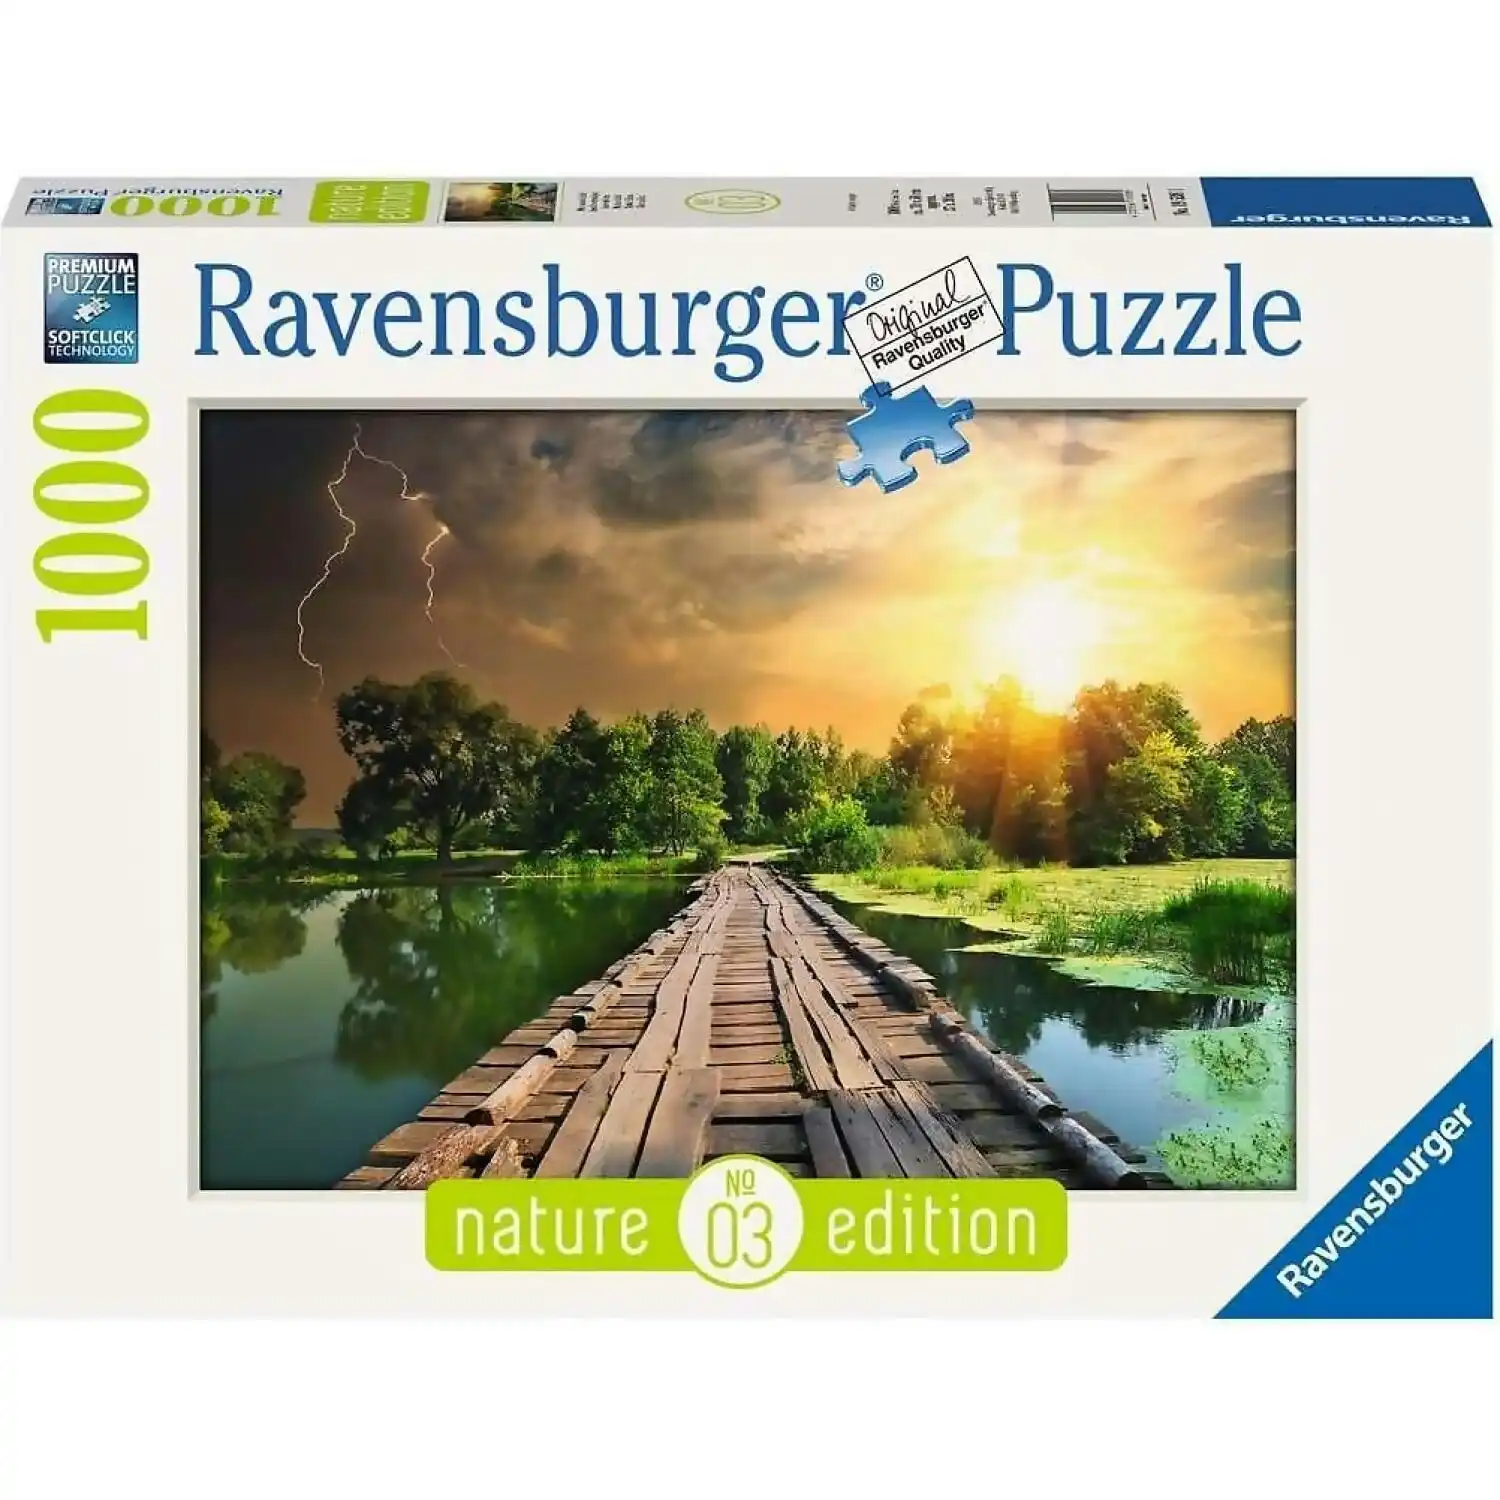 Ravensburger - Mystic Skies Nature Edition No: 03 Jigsaw Puzzle 1000pc